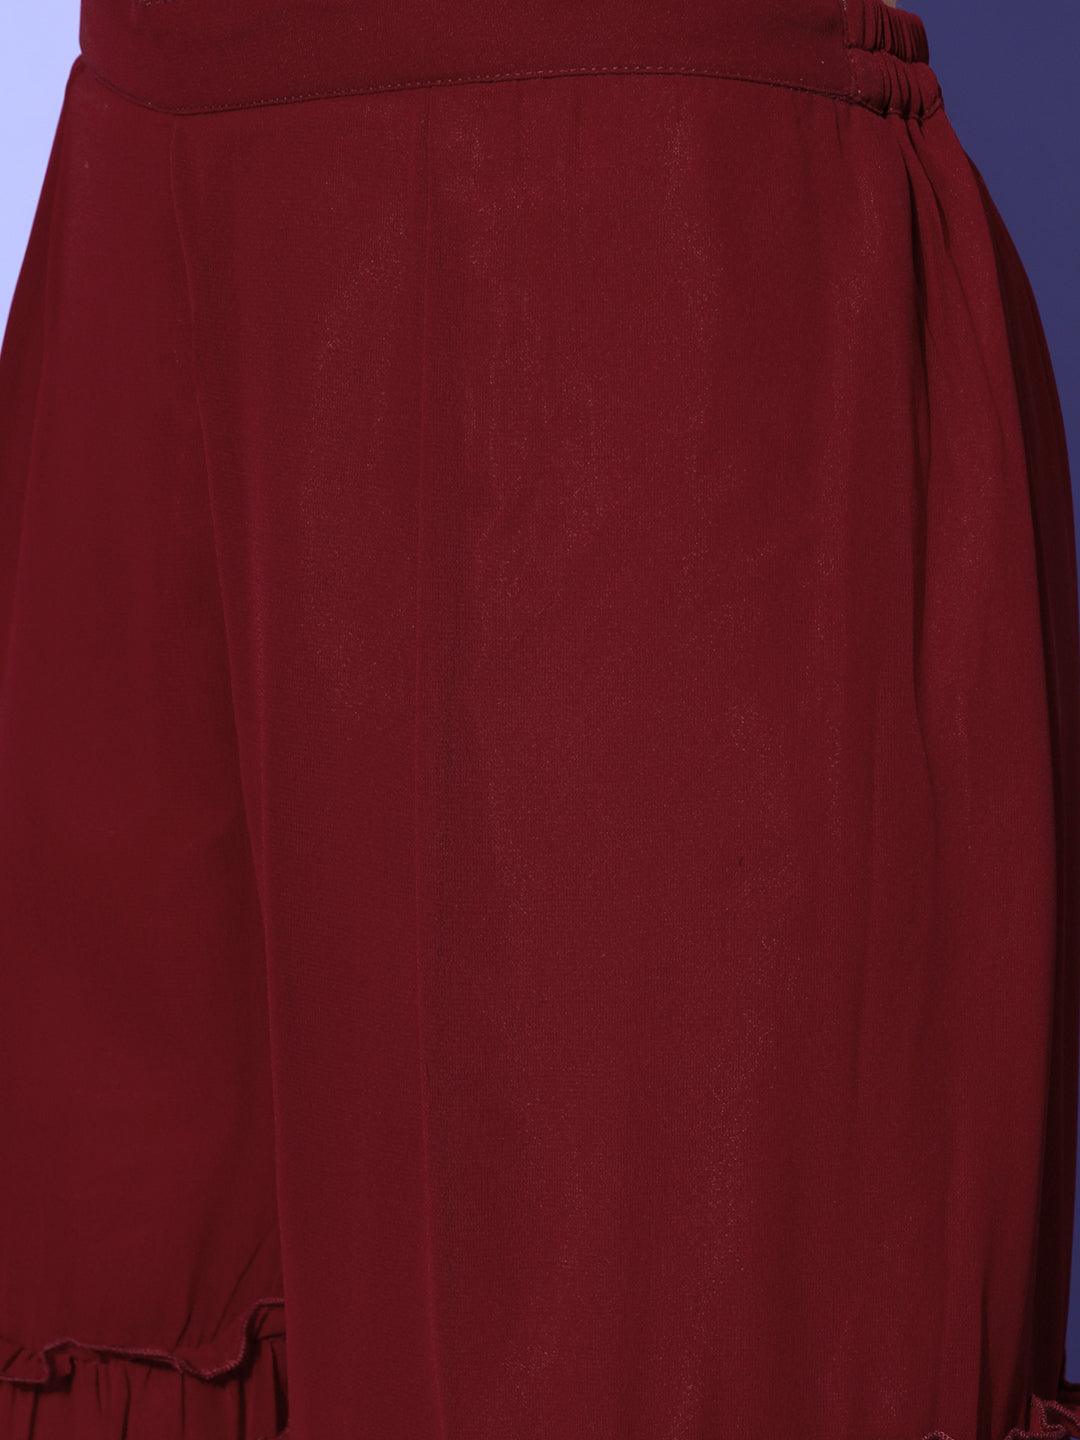 Maroon Embroidered Georgette Straight Sharara Suit Set With Potli - Libas